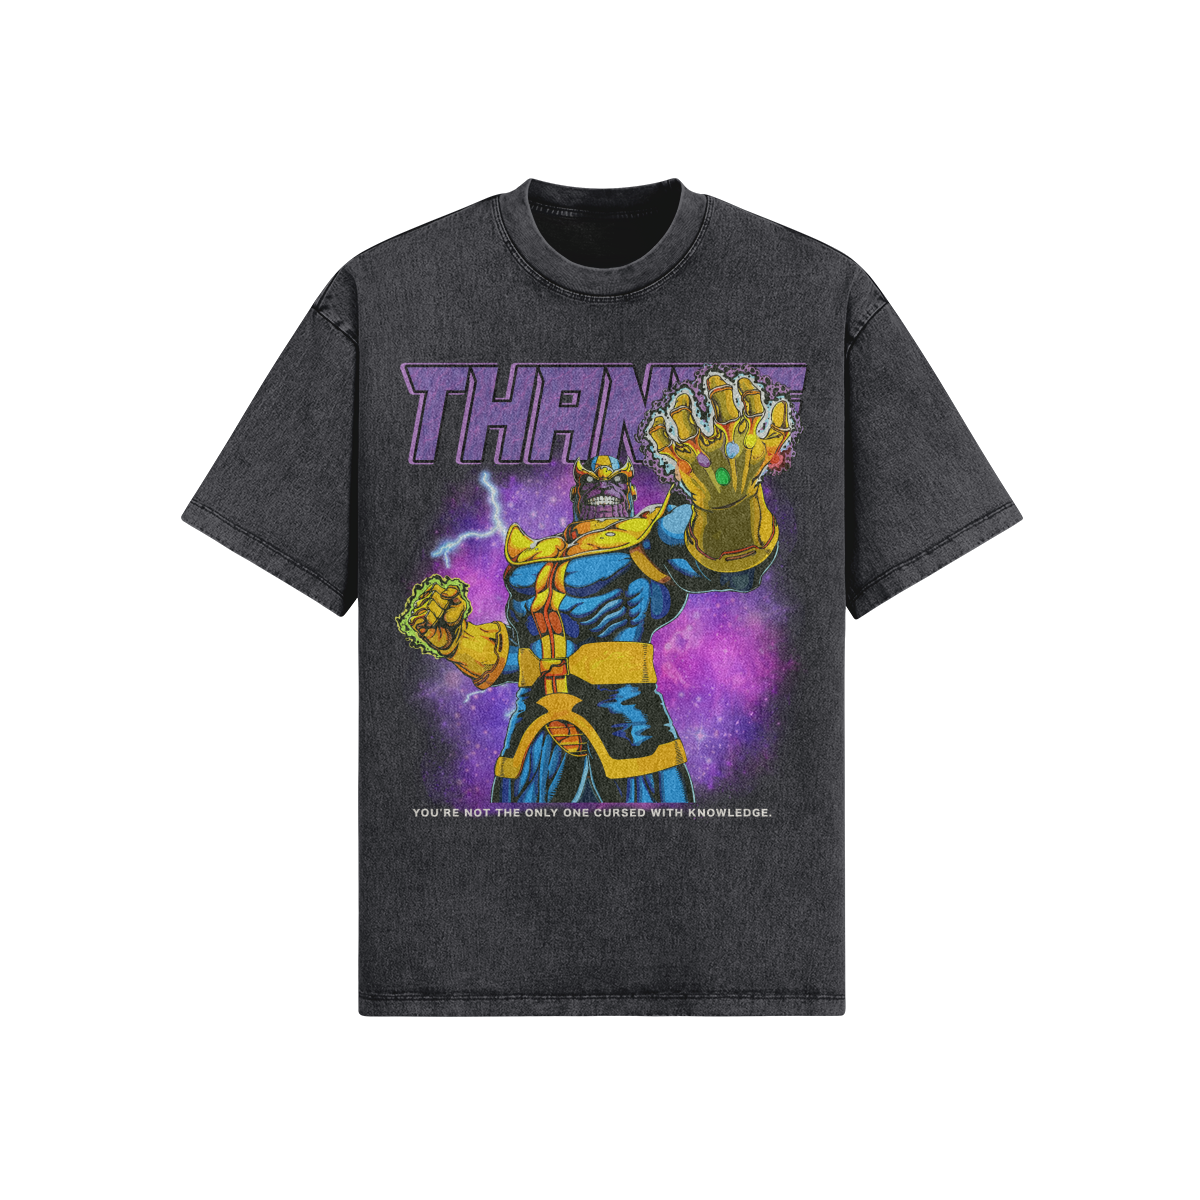 Thanos "I AM INEVITABLE" Vintage